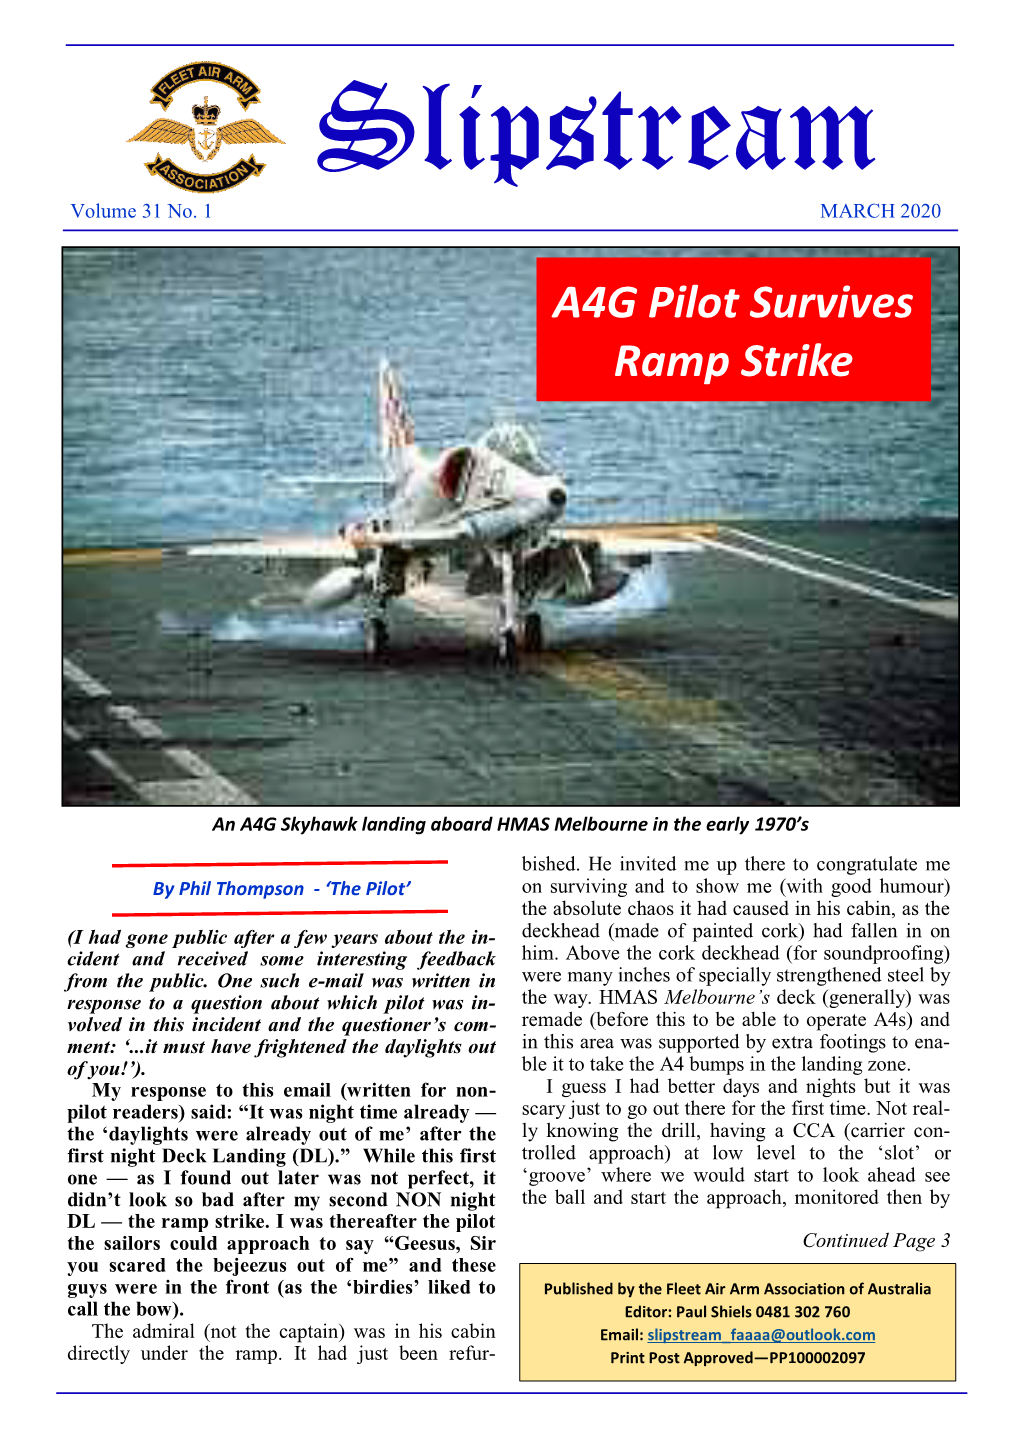 A4G Pilot Survives Ramp Strike